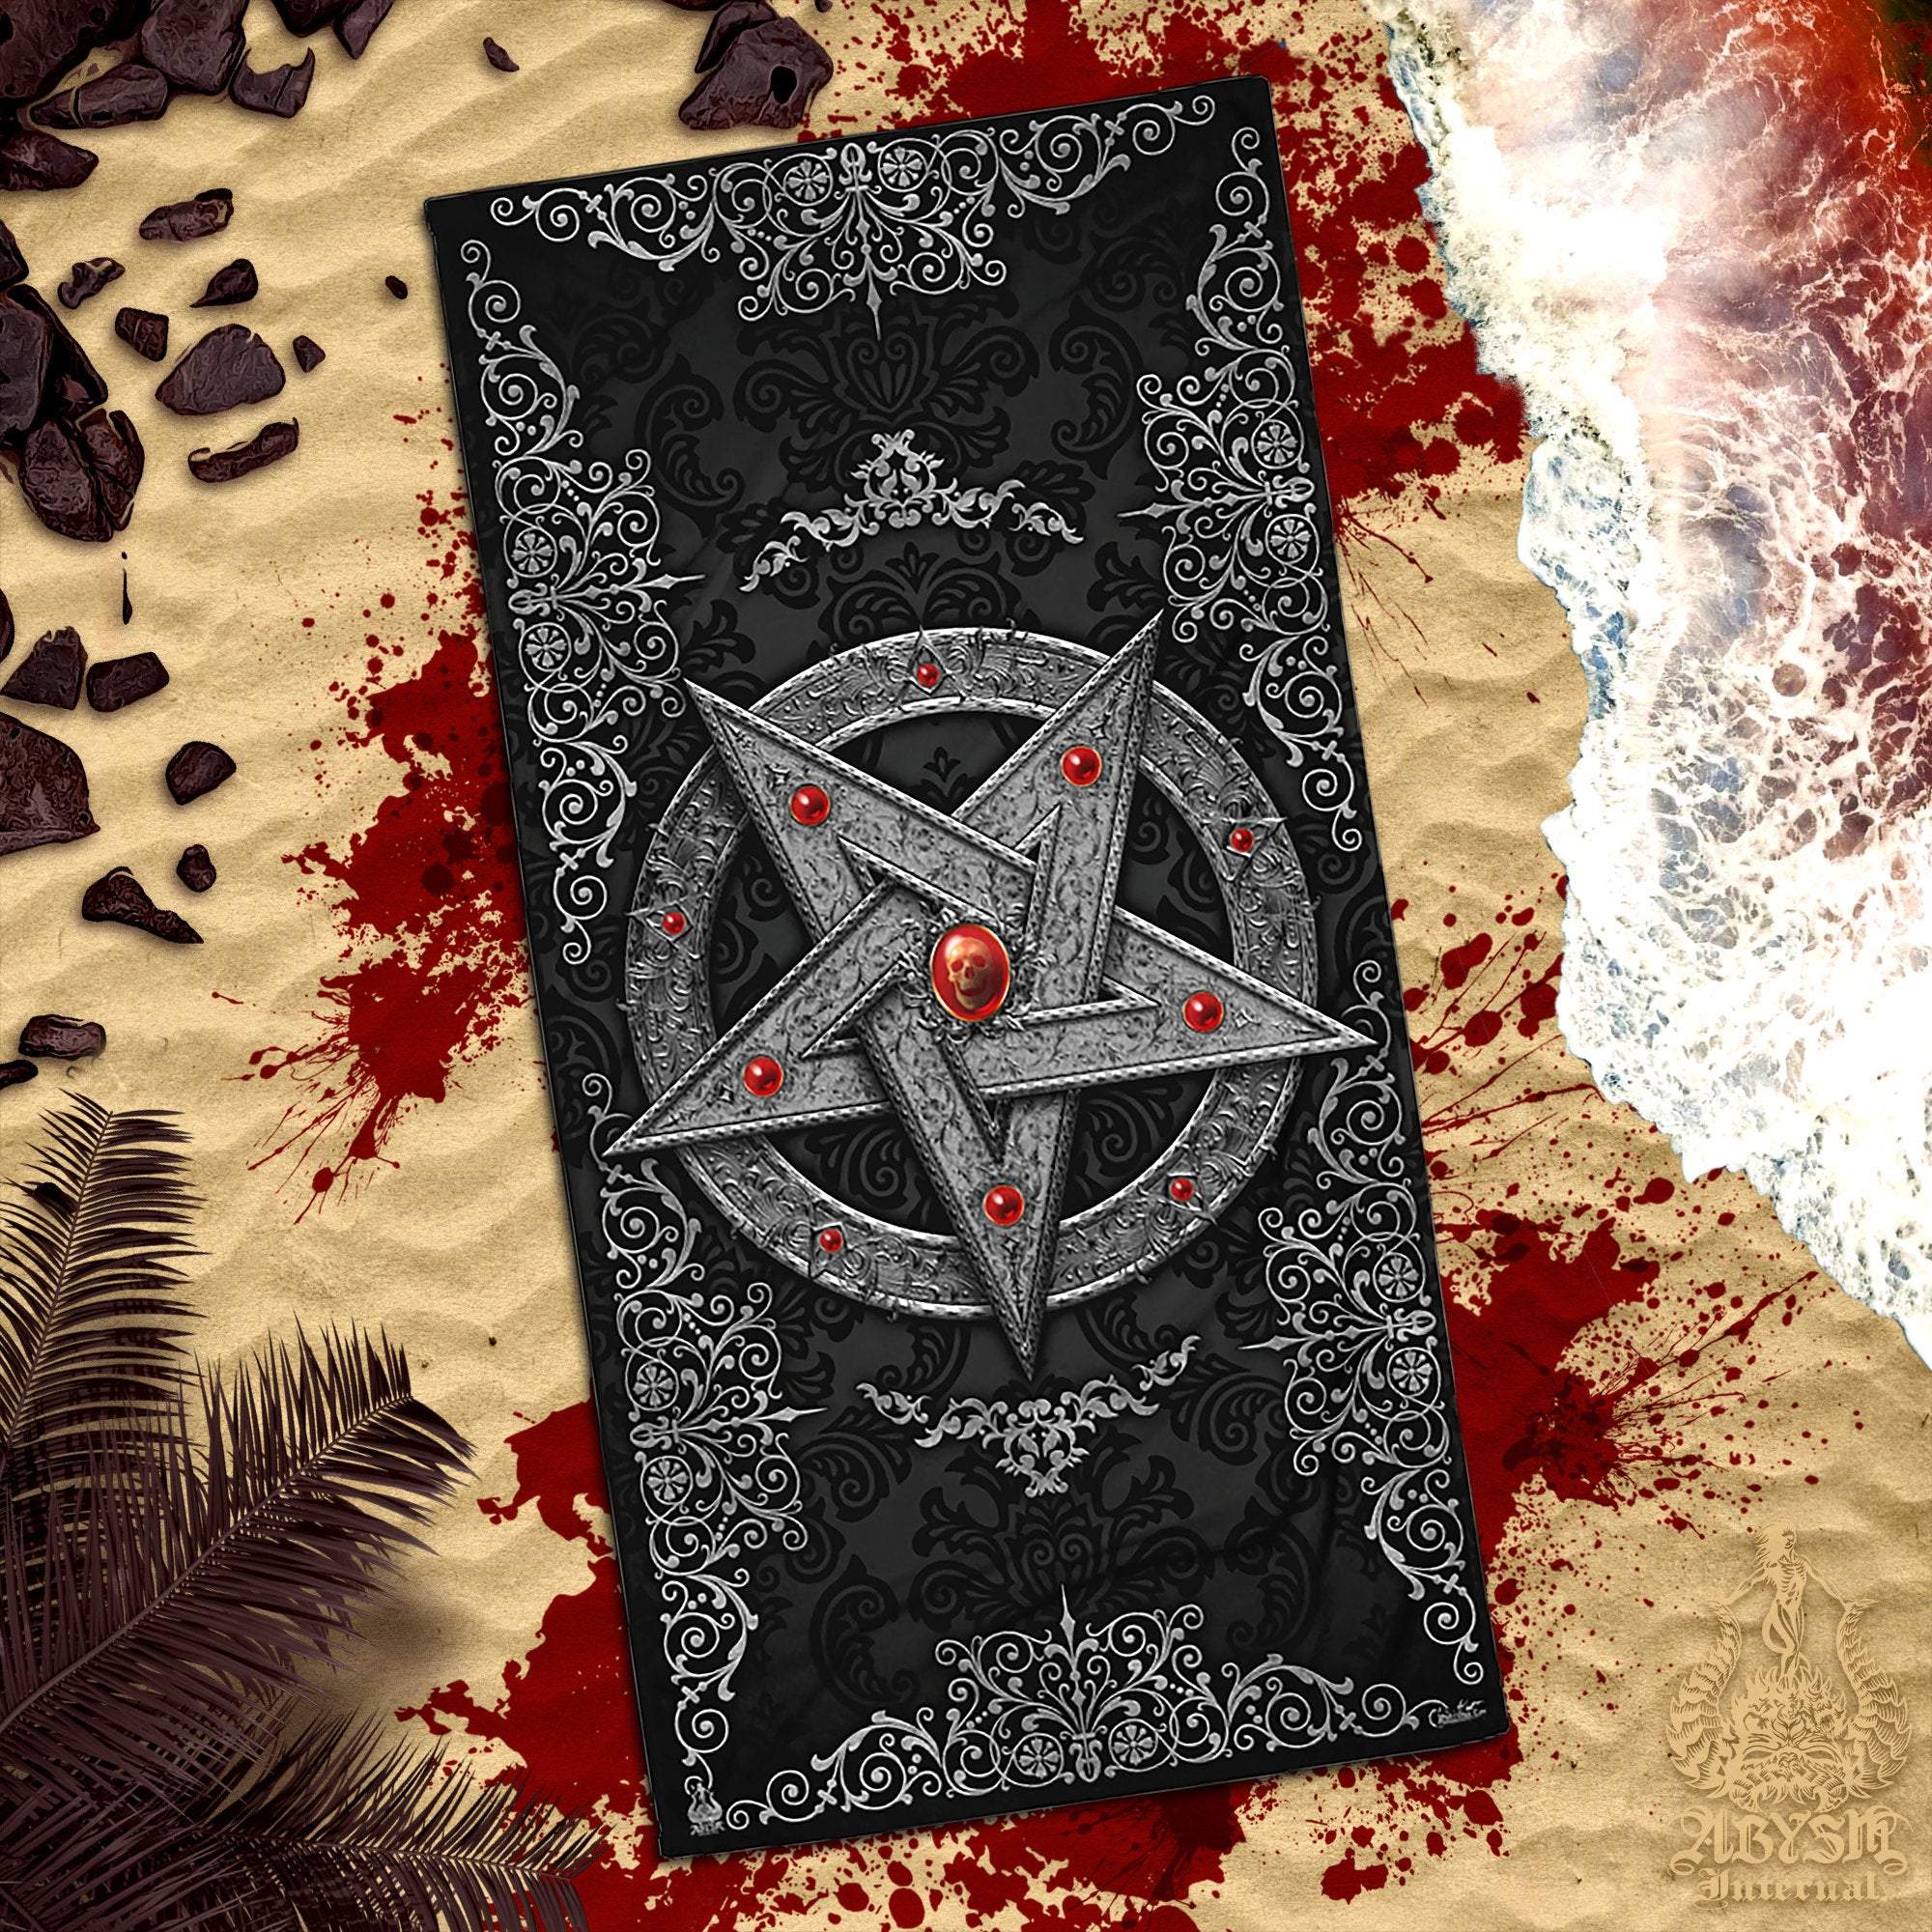 Pentagram Beach Towel, Satanic Decor, Goth - Silver - Abysm Internal